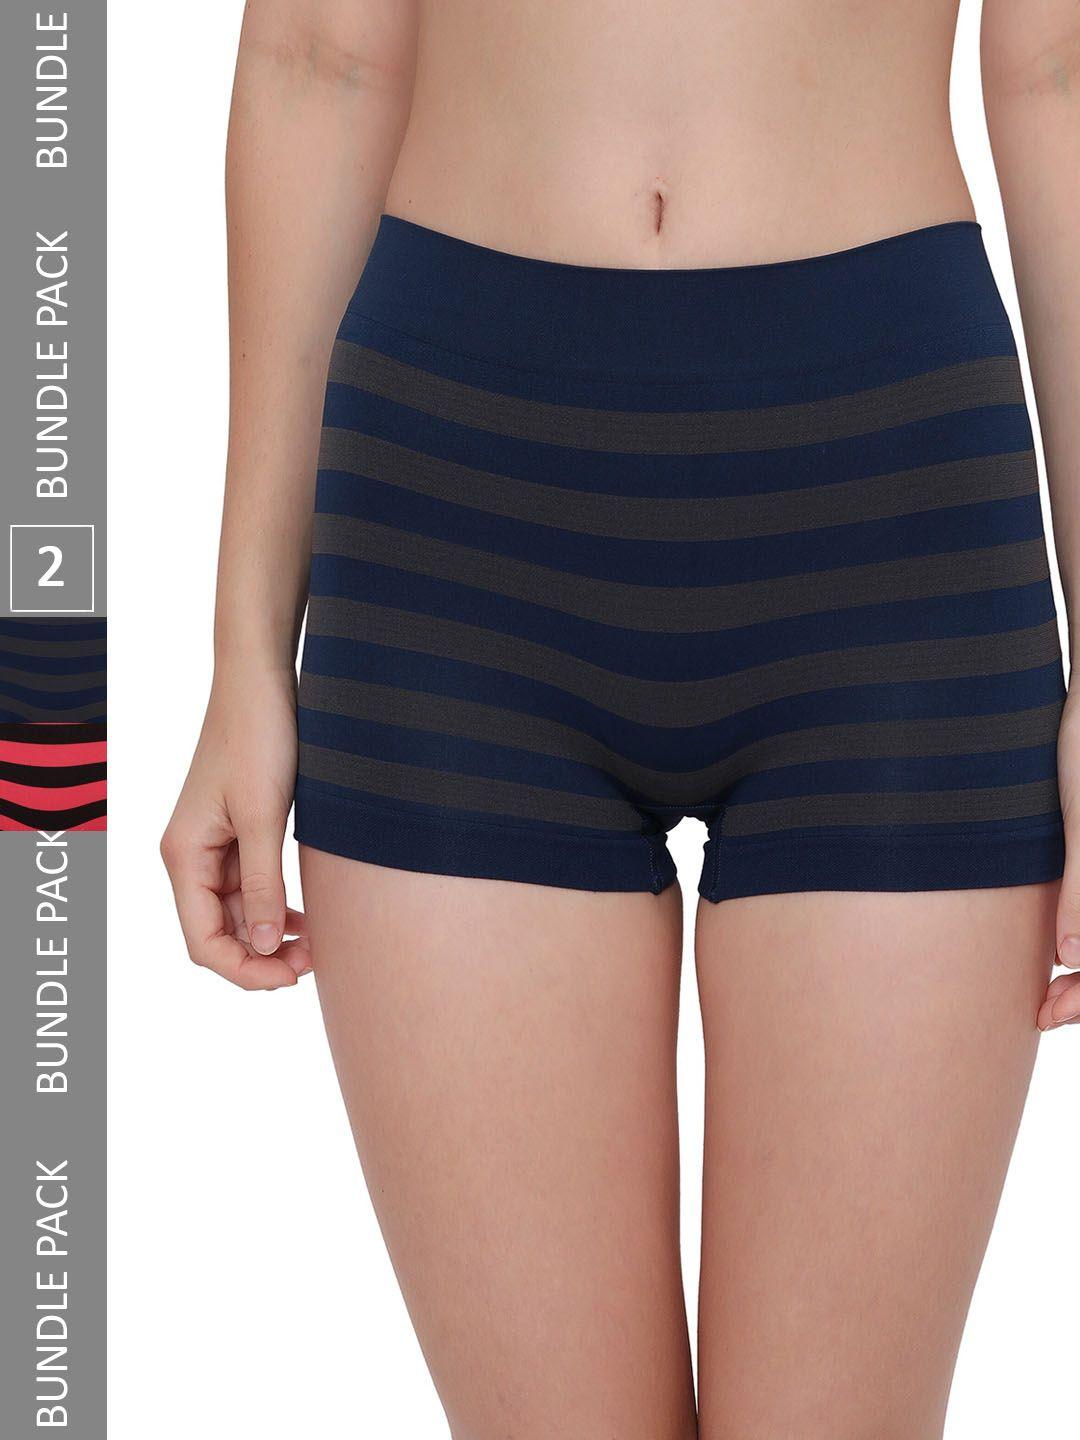 plumbury women pack of 2 striped anti-microbial seamless boy shorts briefs